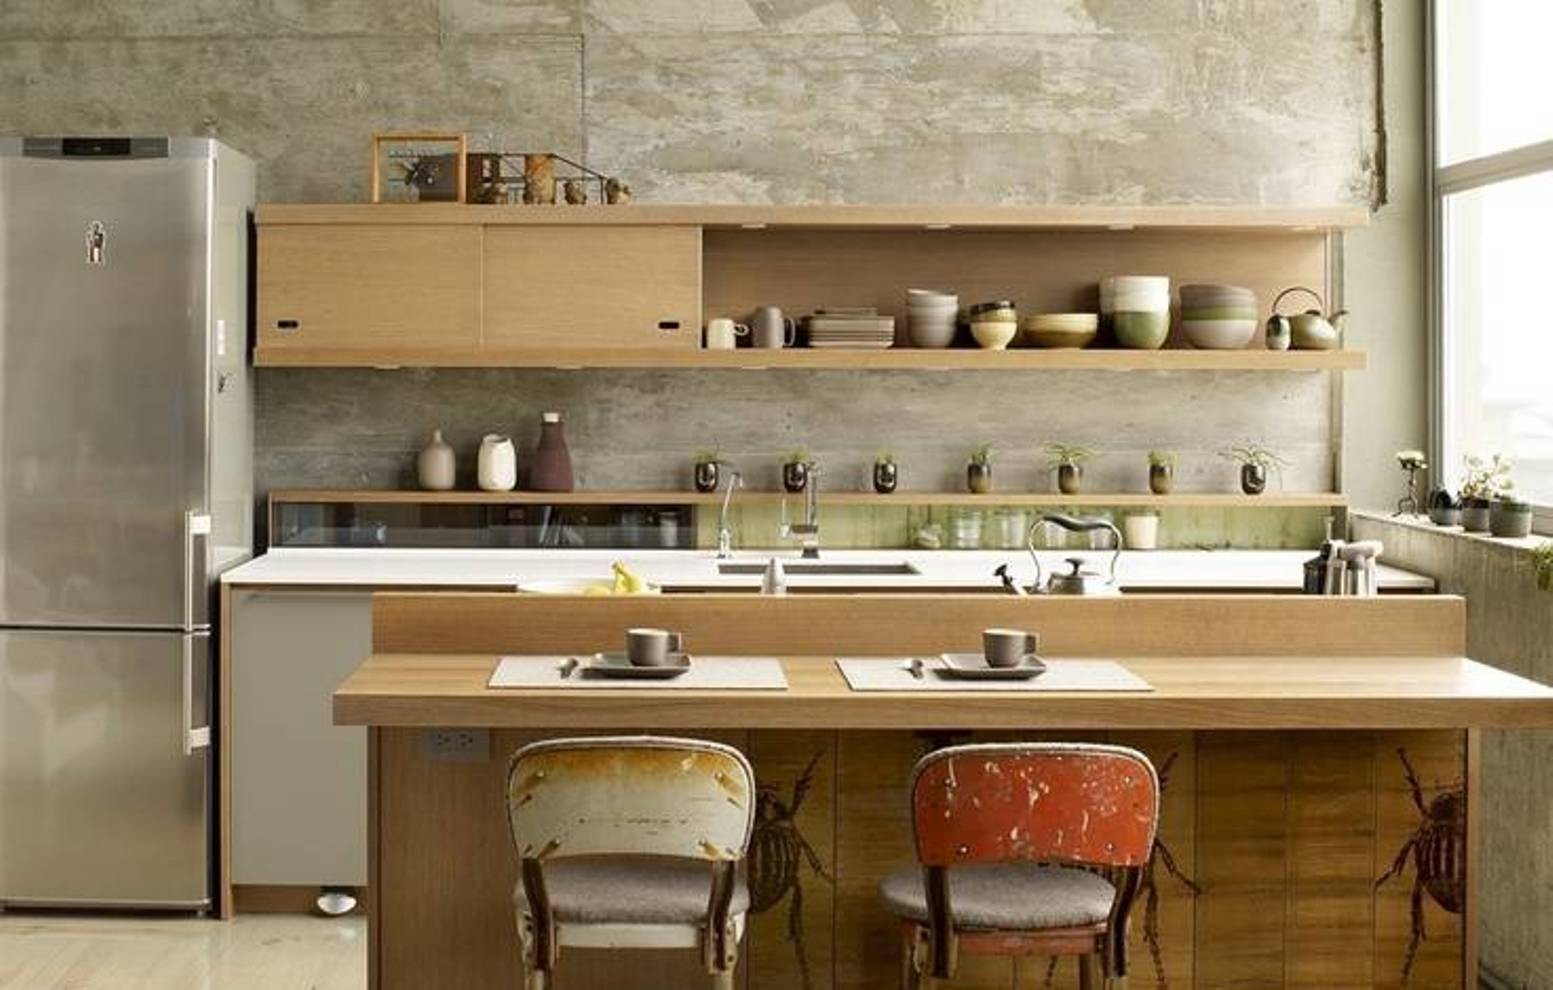  for-Japanese-Kitchen-Designs-with-Steel-Fridge-near-Kitchen-Table.jpg